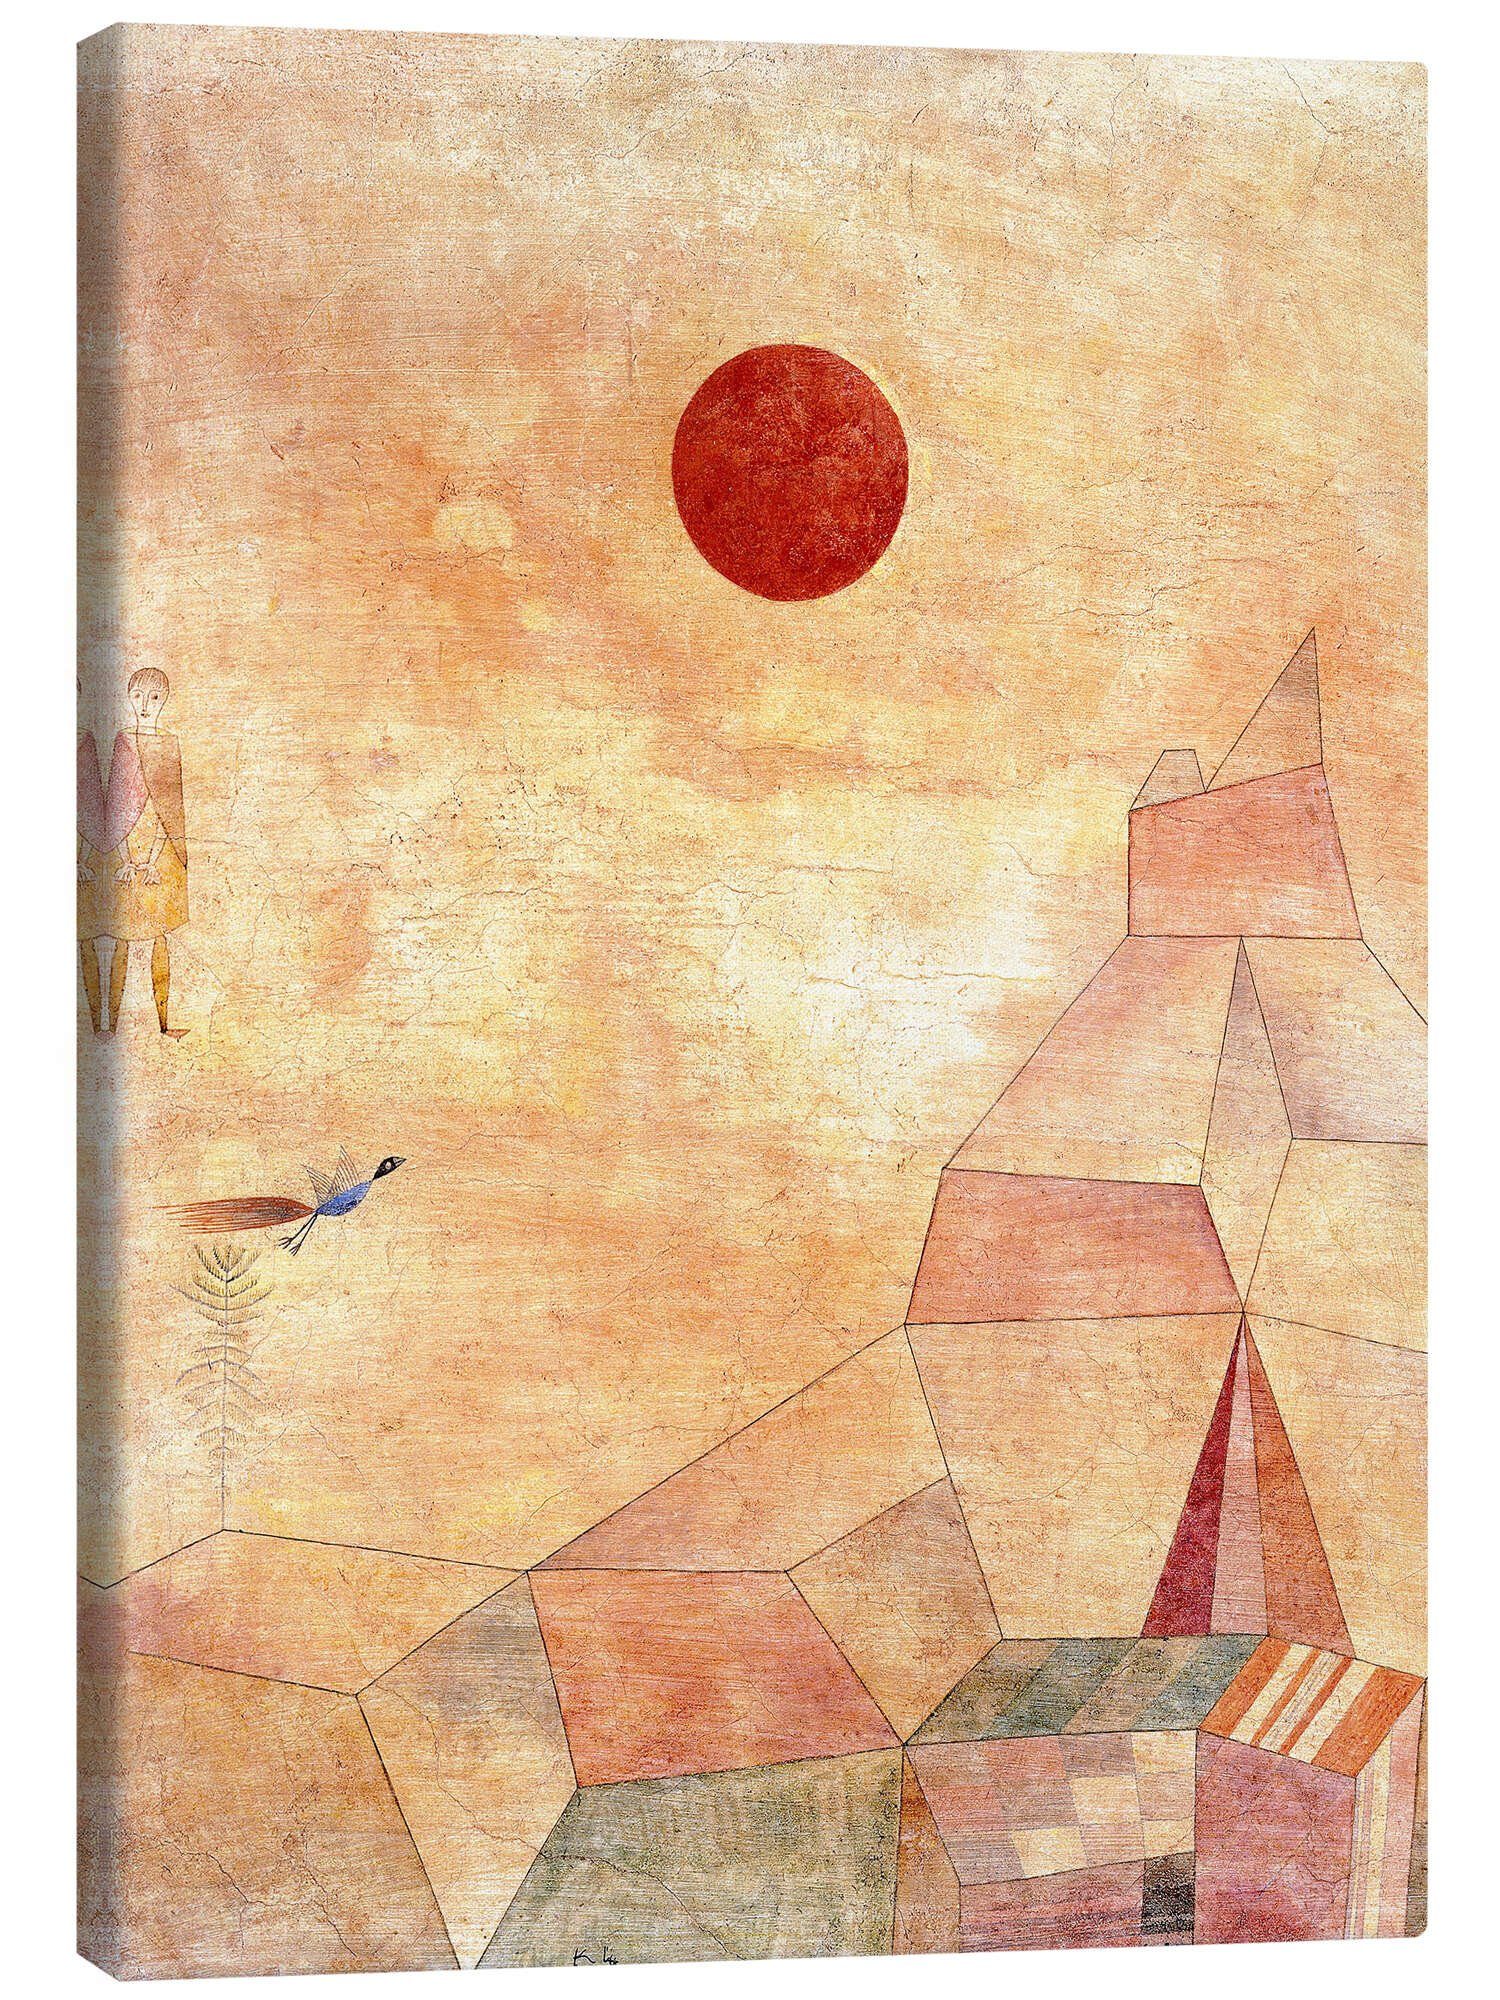 Posterlounge Leinwandbild Paul Klee, Märchen, Wohnzimmer Malerei